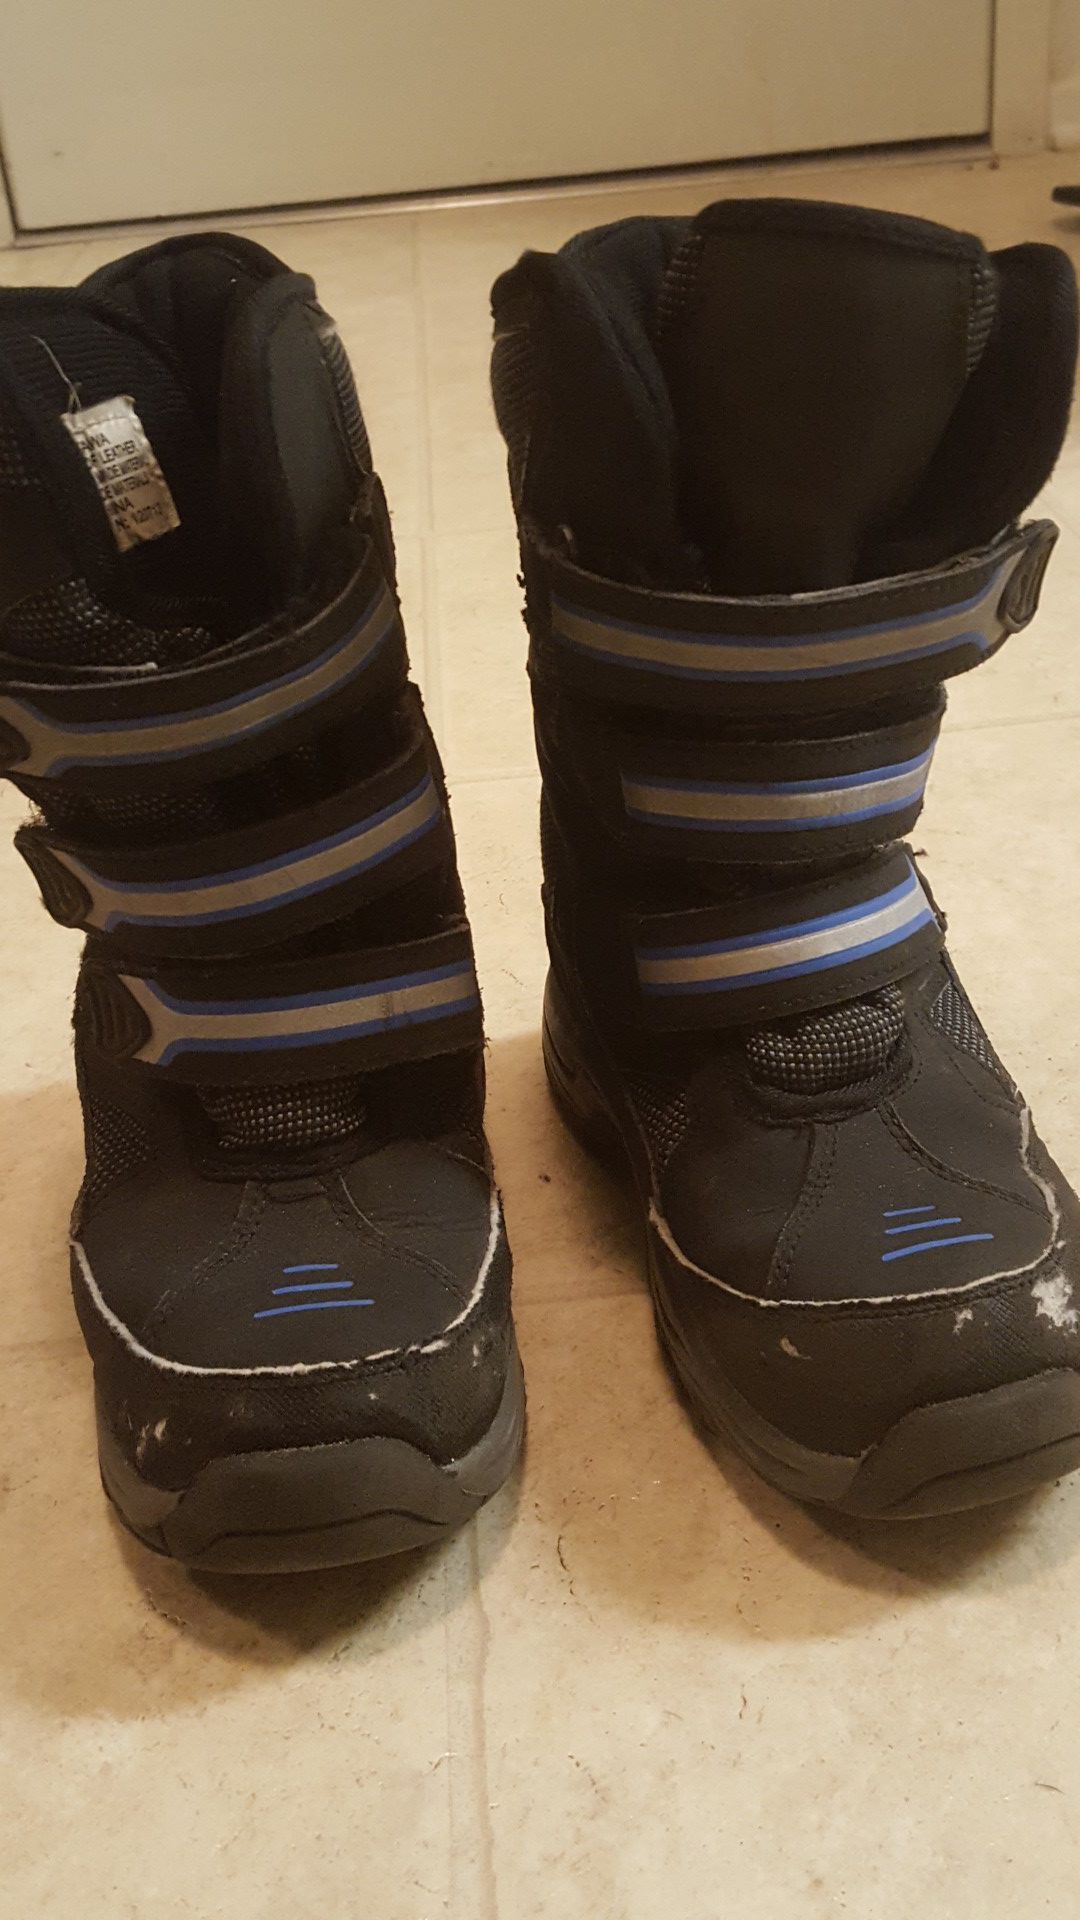 Snow boots, kids size 1